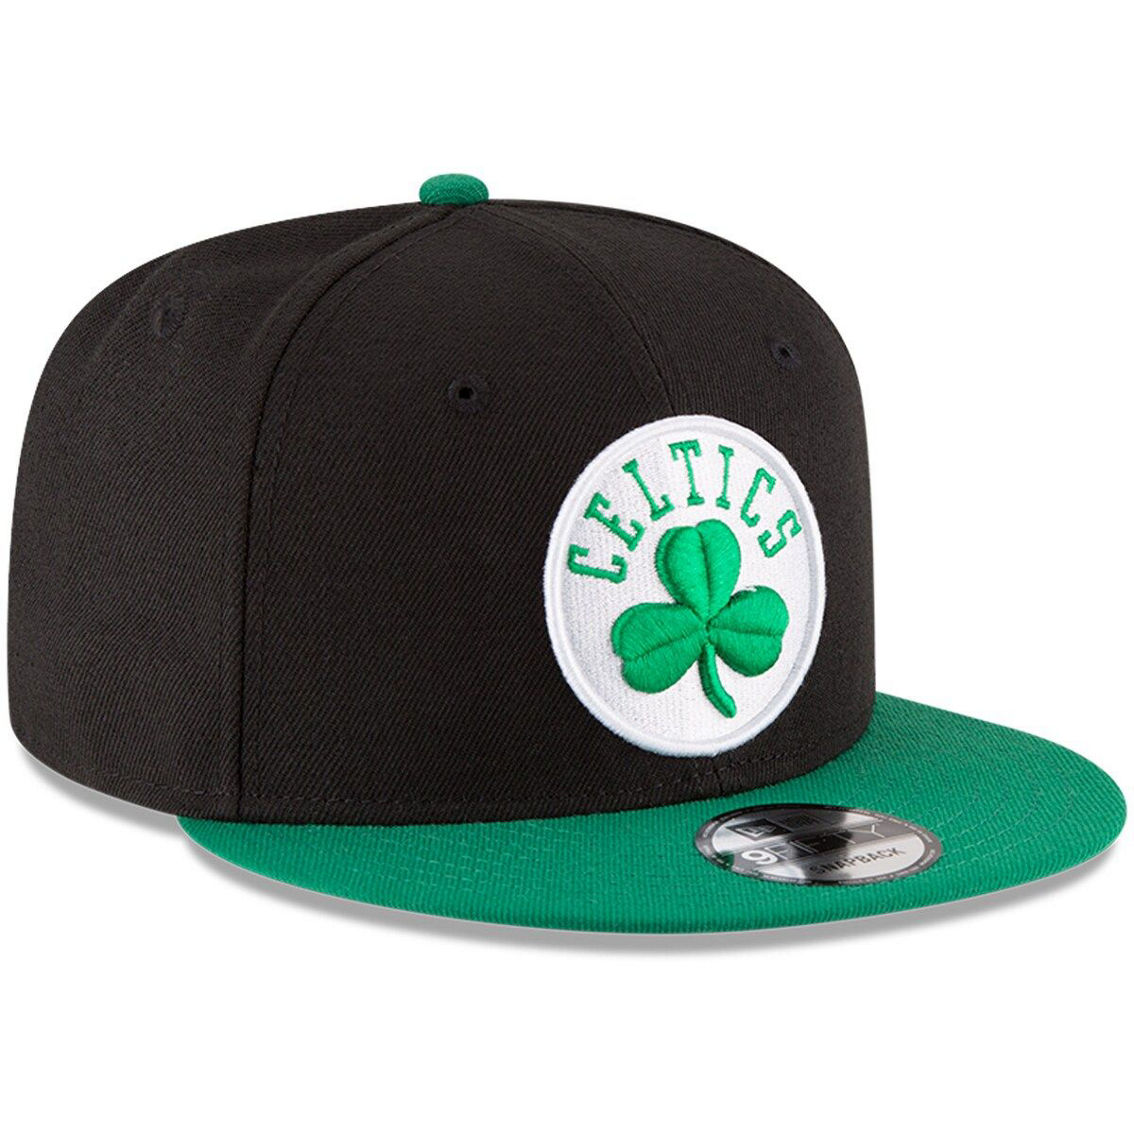 New Era Men's Black/Kelly Green Boston Celtics 2-Tone 9FIFTY Adjustable Snapback Hat - Image 4 of 4